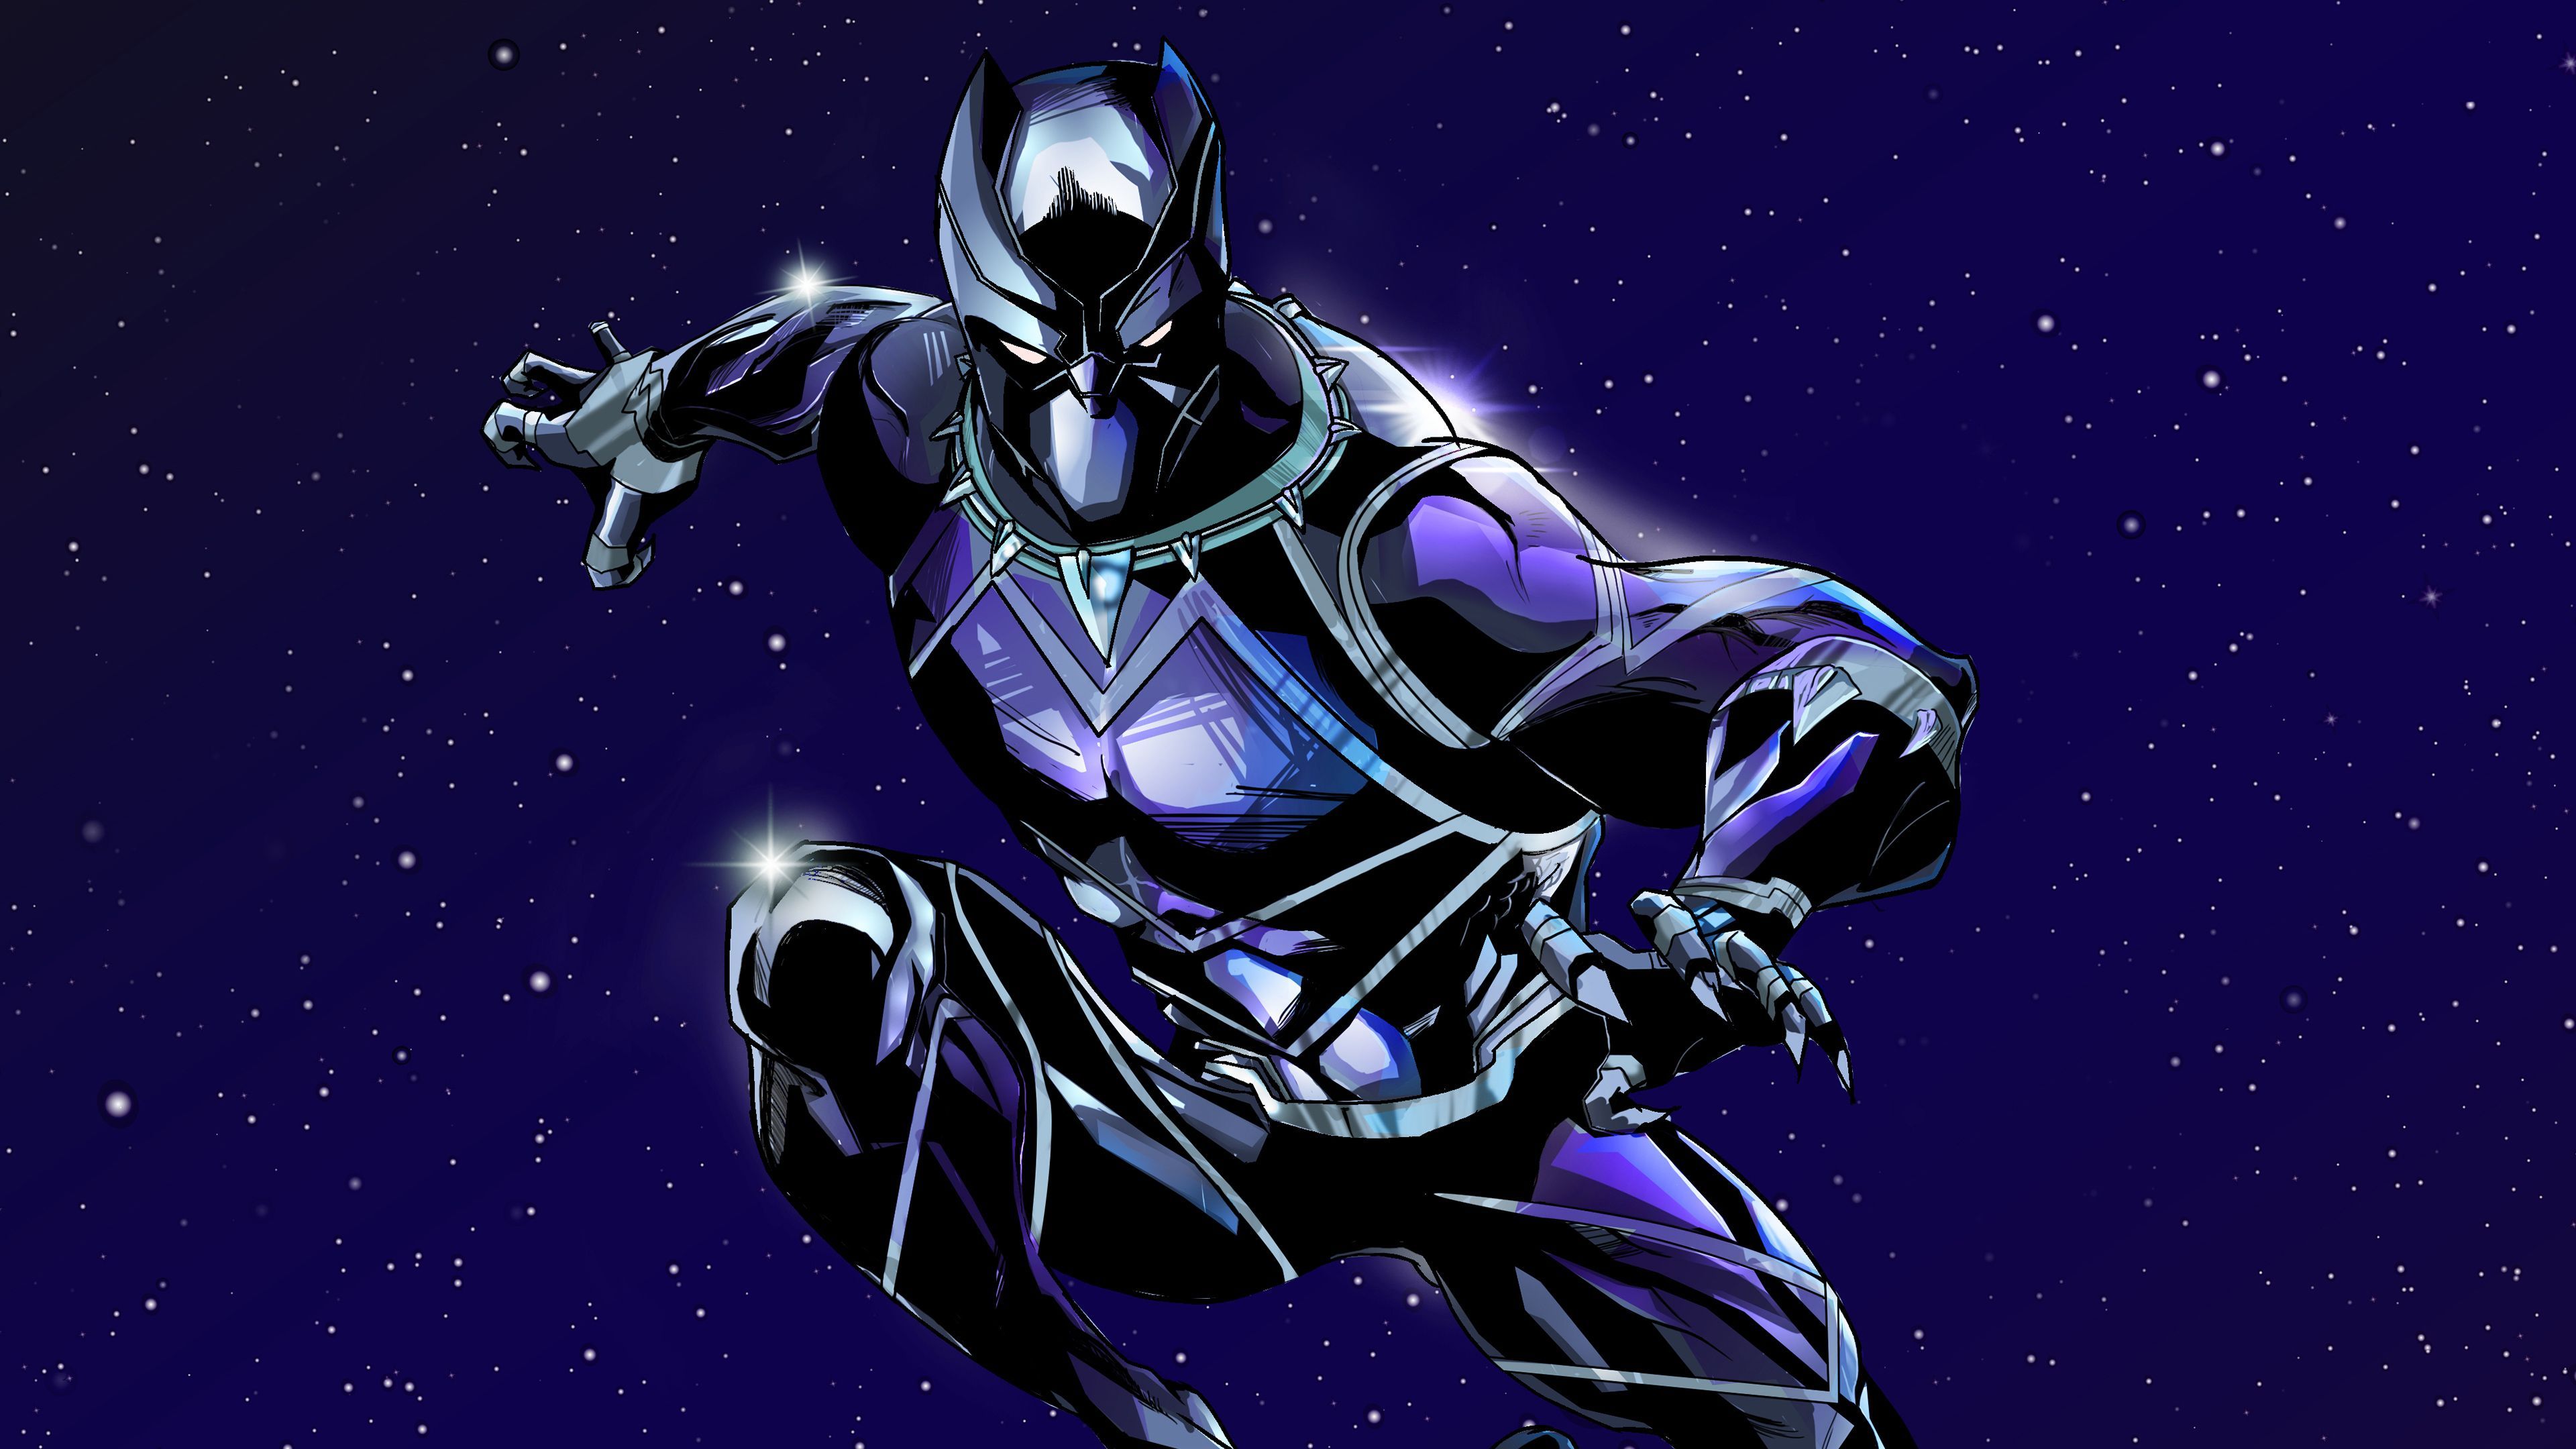 Black Panther 4k New Artwork Superheroes Wallpaper, Hd Wallpaper, Digital Art Wallpaper, Black Panther. Superhero Wallpaper, Avengers Wallpaper, Neon Wallpaper